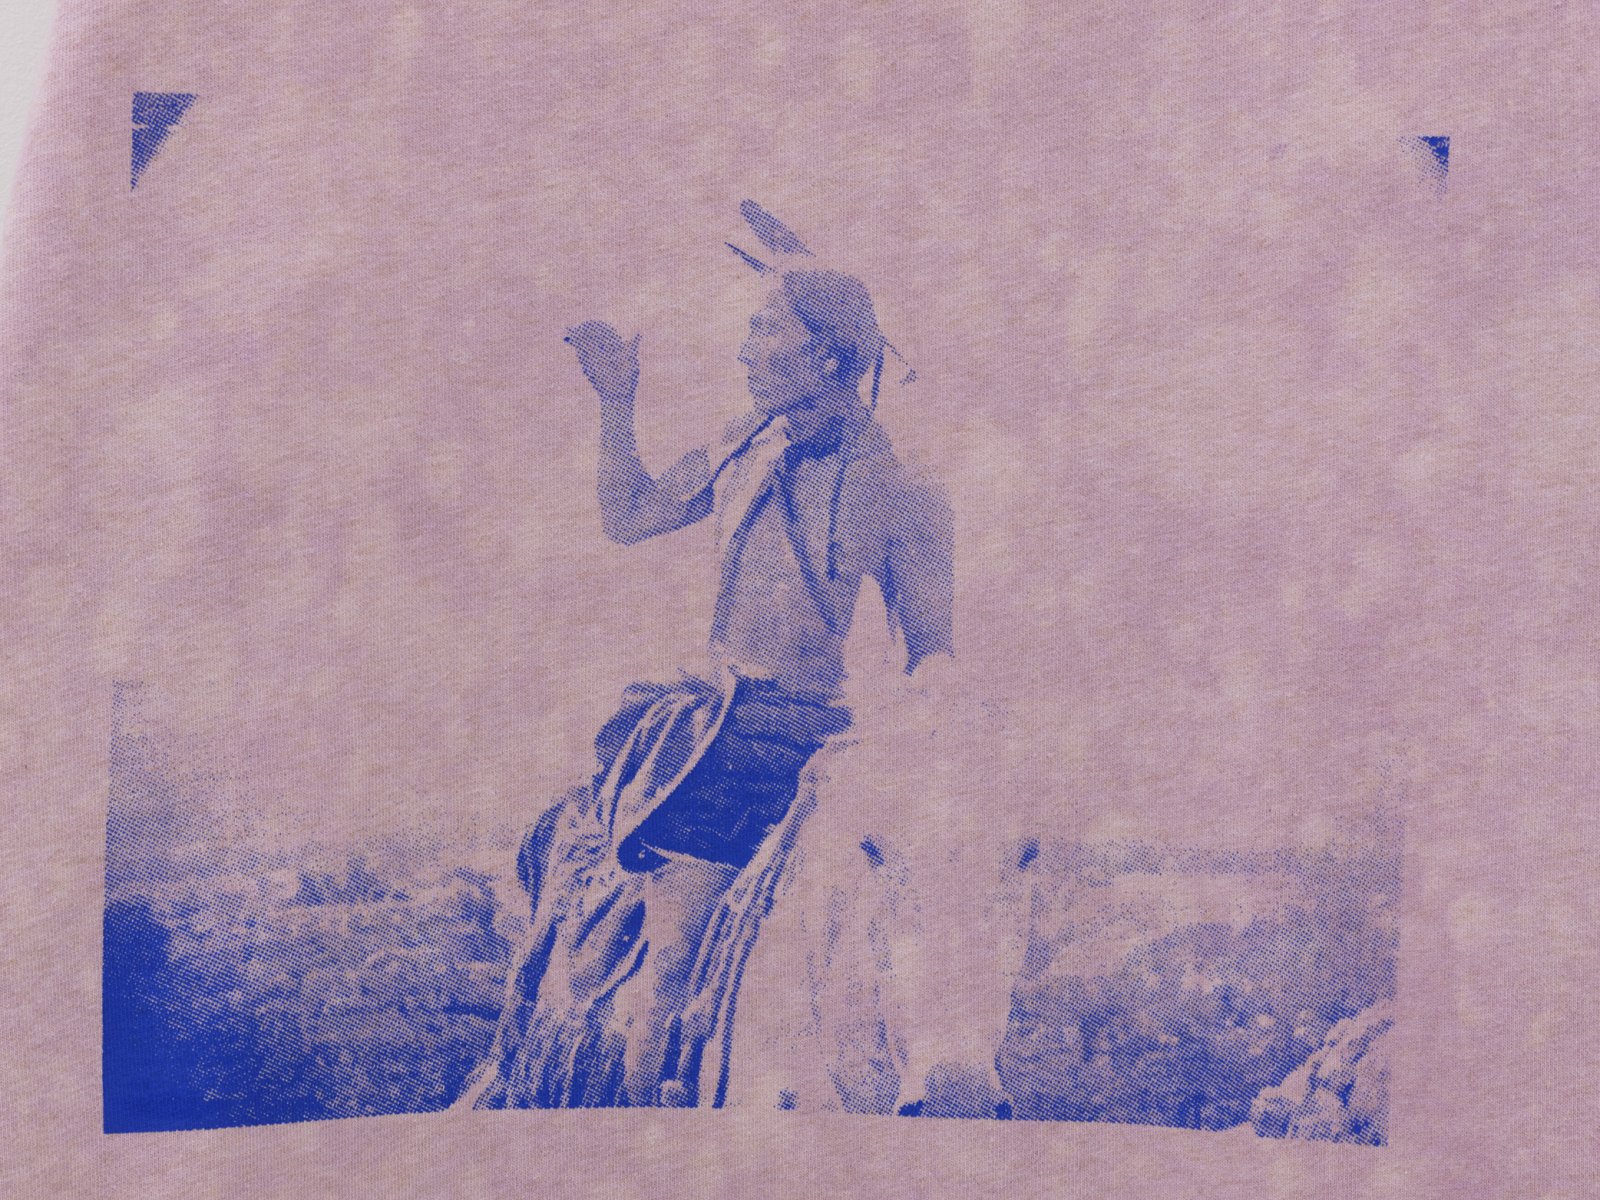 Duane Linklater, whiteeagle (detail), 2020, handmade sweater, cochineal dye, silkscreen, nails, 38 x 20 x 5 in. (97 x 51 x 13 cm) by Duane Linklater